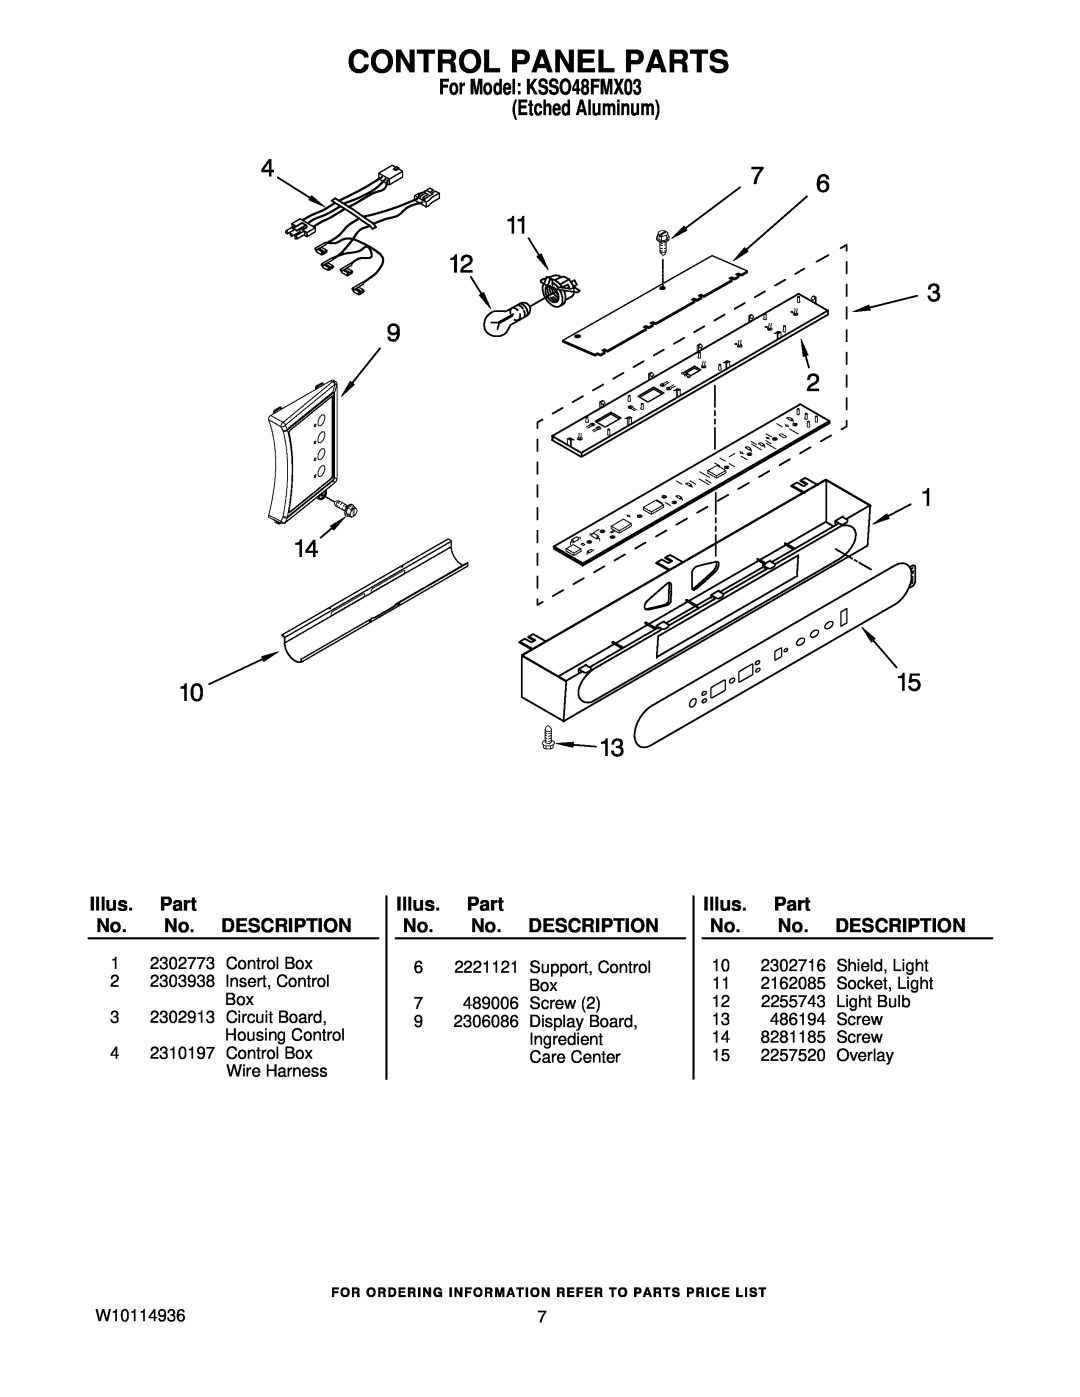 KitchenAid manual Control Panel Parts, For Model KSSO48FMX03 Etched Aluminum, Illus. Part No. No. DESCRIPTION 